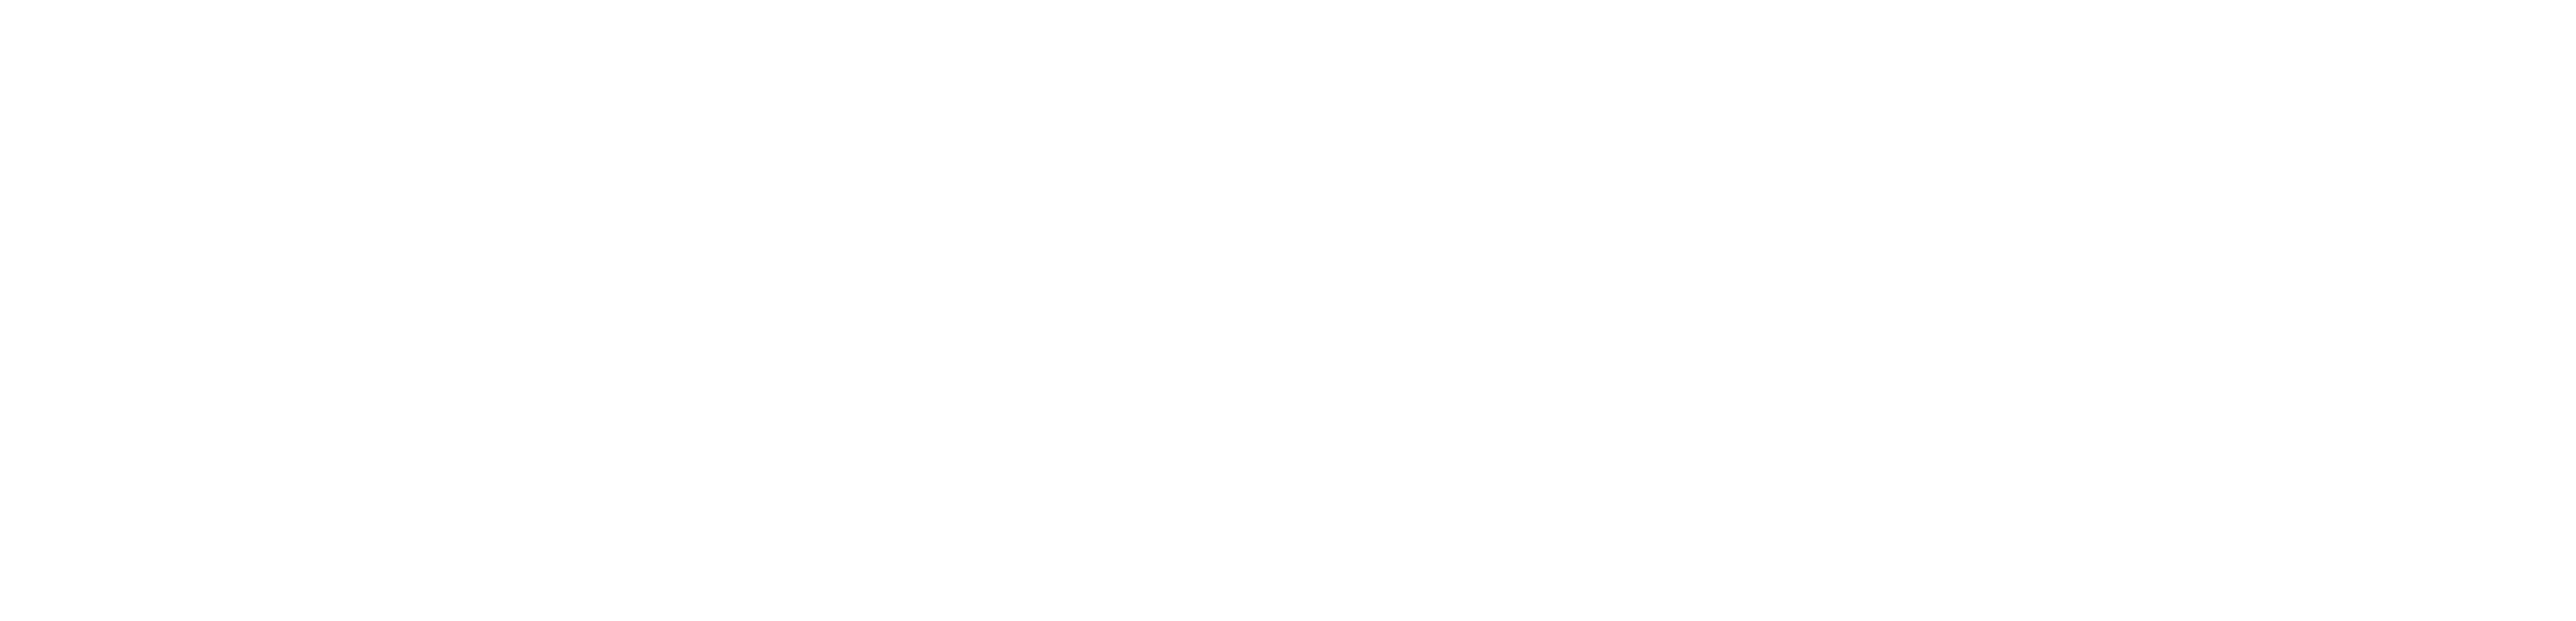 Evasion Room